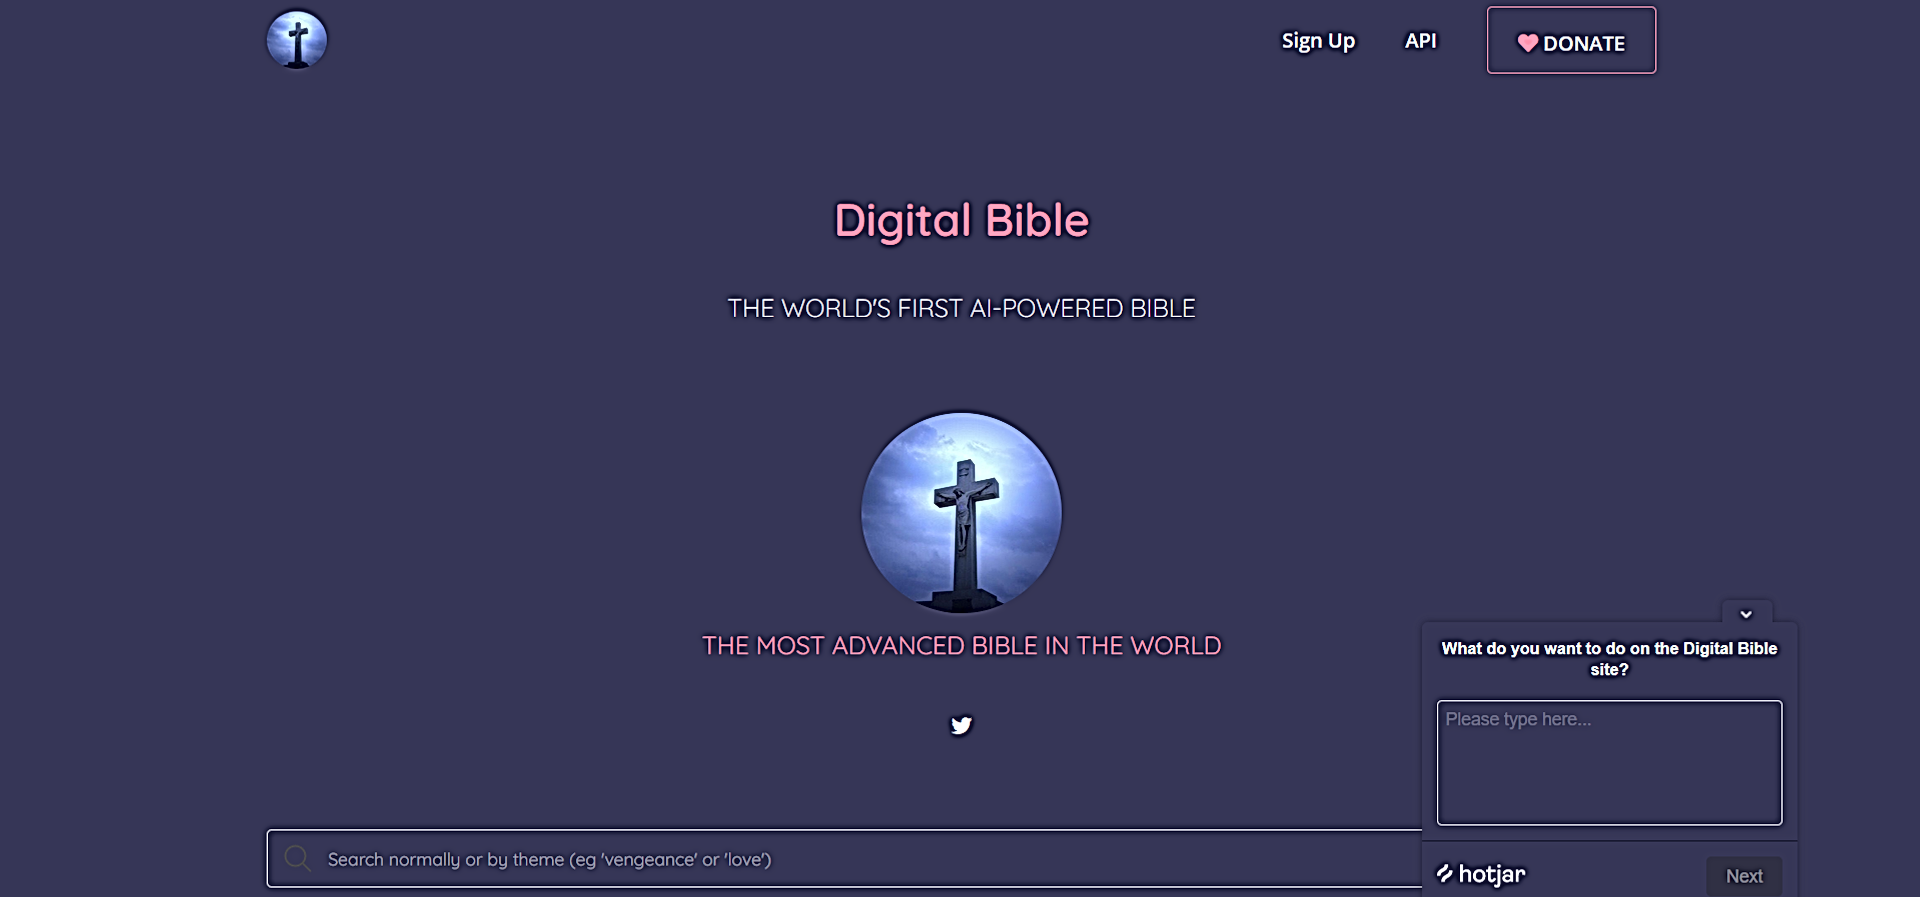 Digital Bible featured